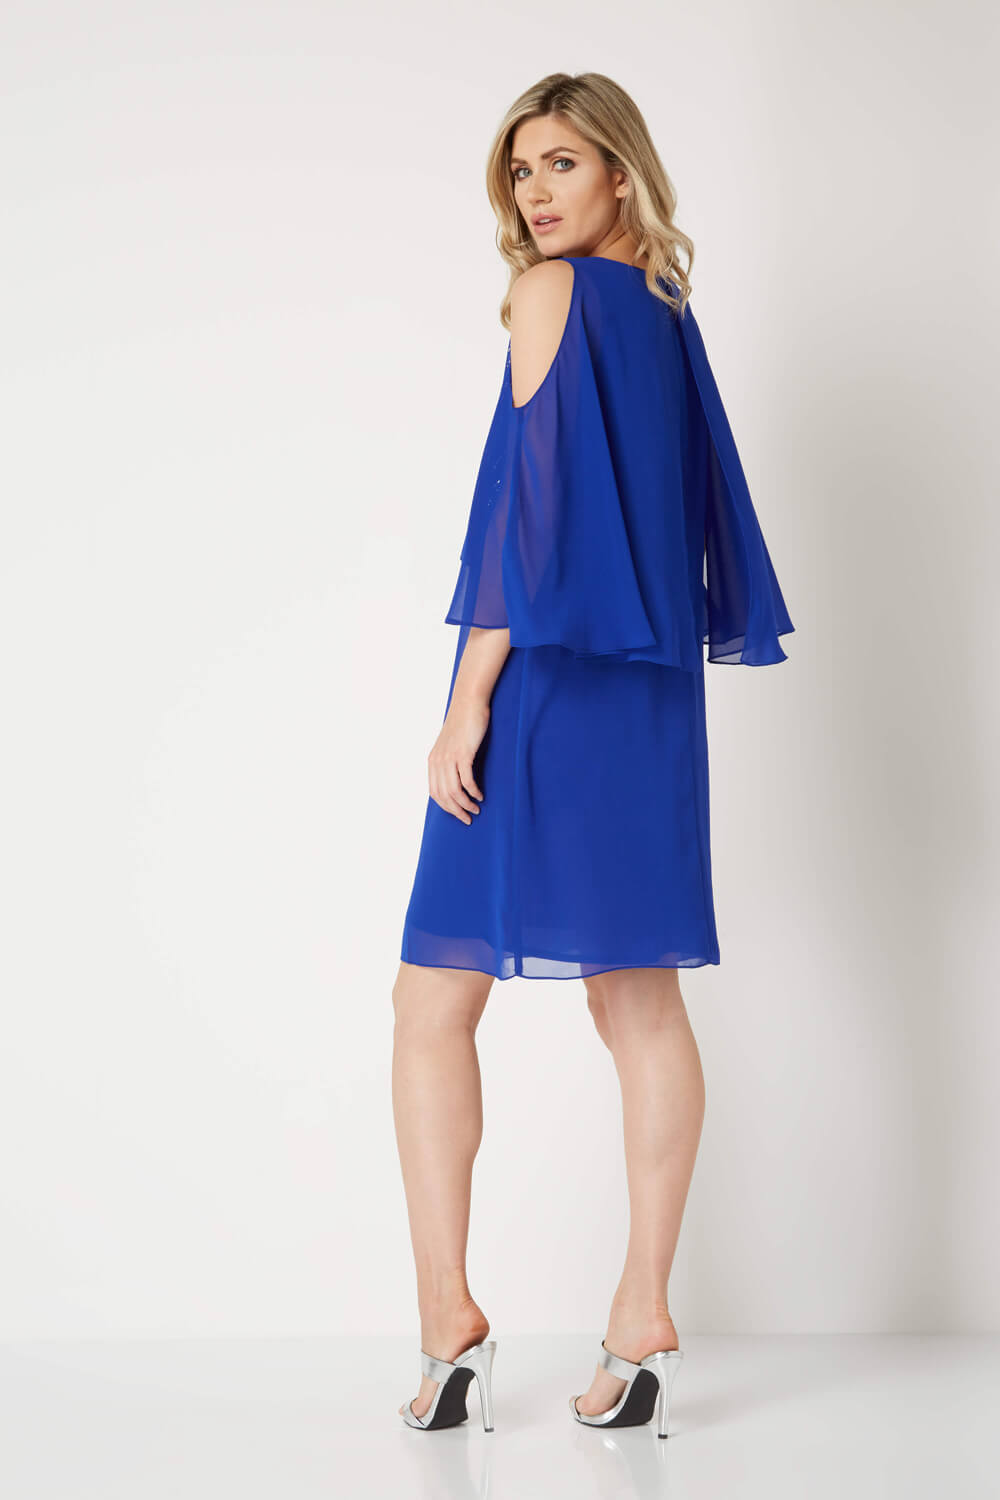 Royal Blue Sparkle Chiffon Overlay Dress, Image 3 of 5